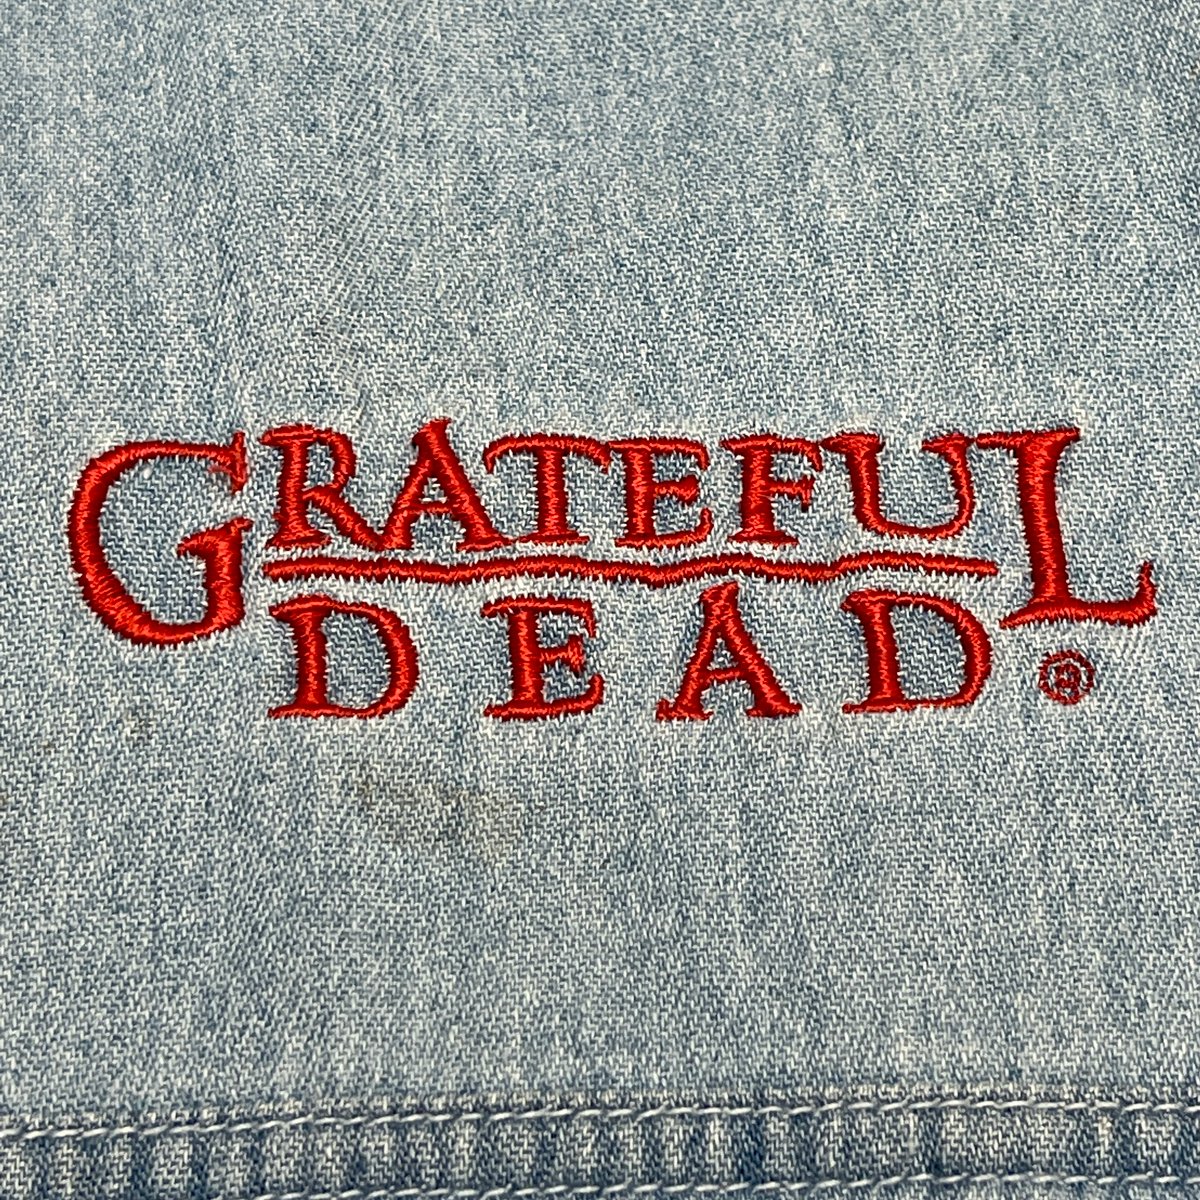 Original Vintage Grateful Dead Crew 90â€™s Embroidered Denim Long Sleeve!!! Tagged Large. Fits XL!!